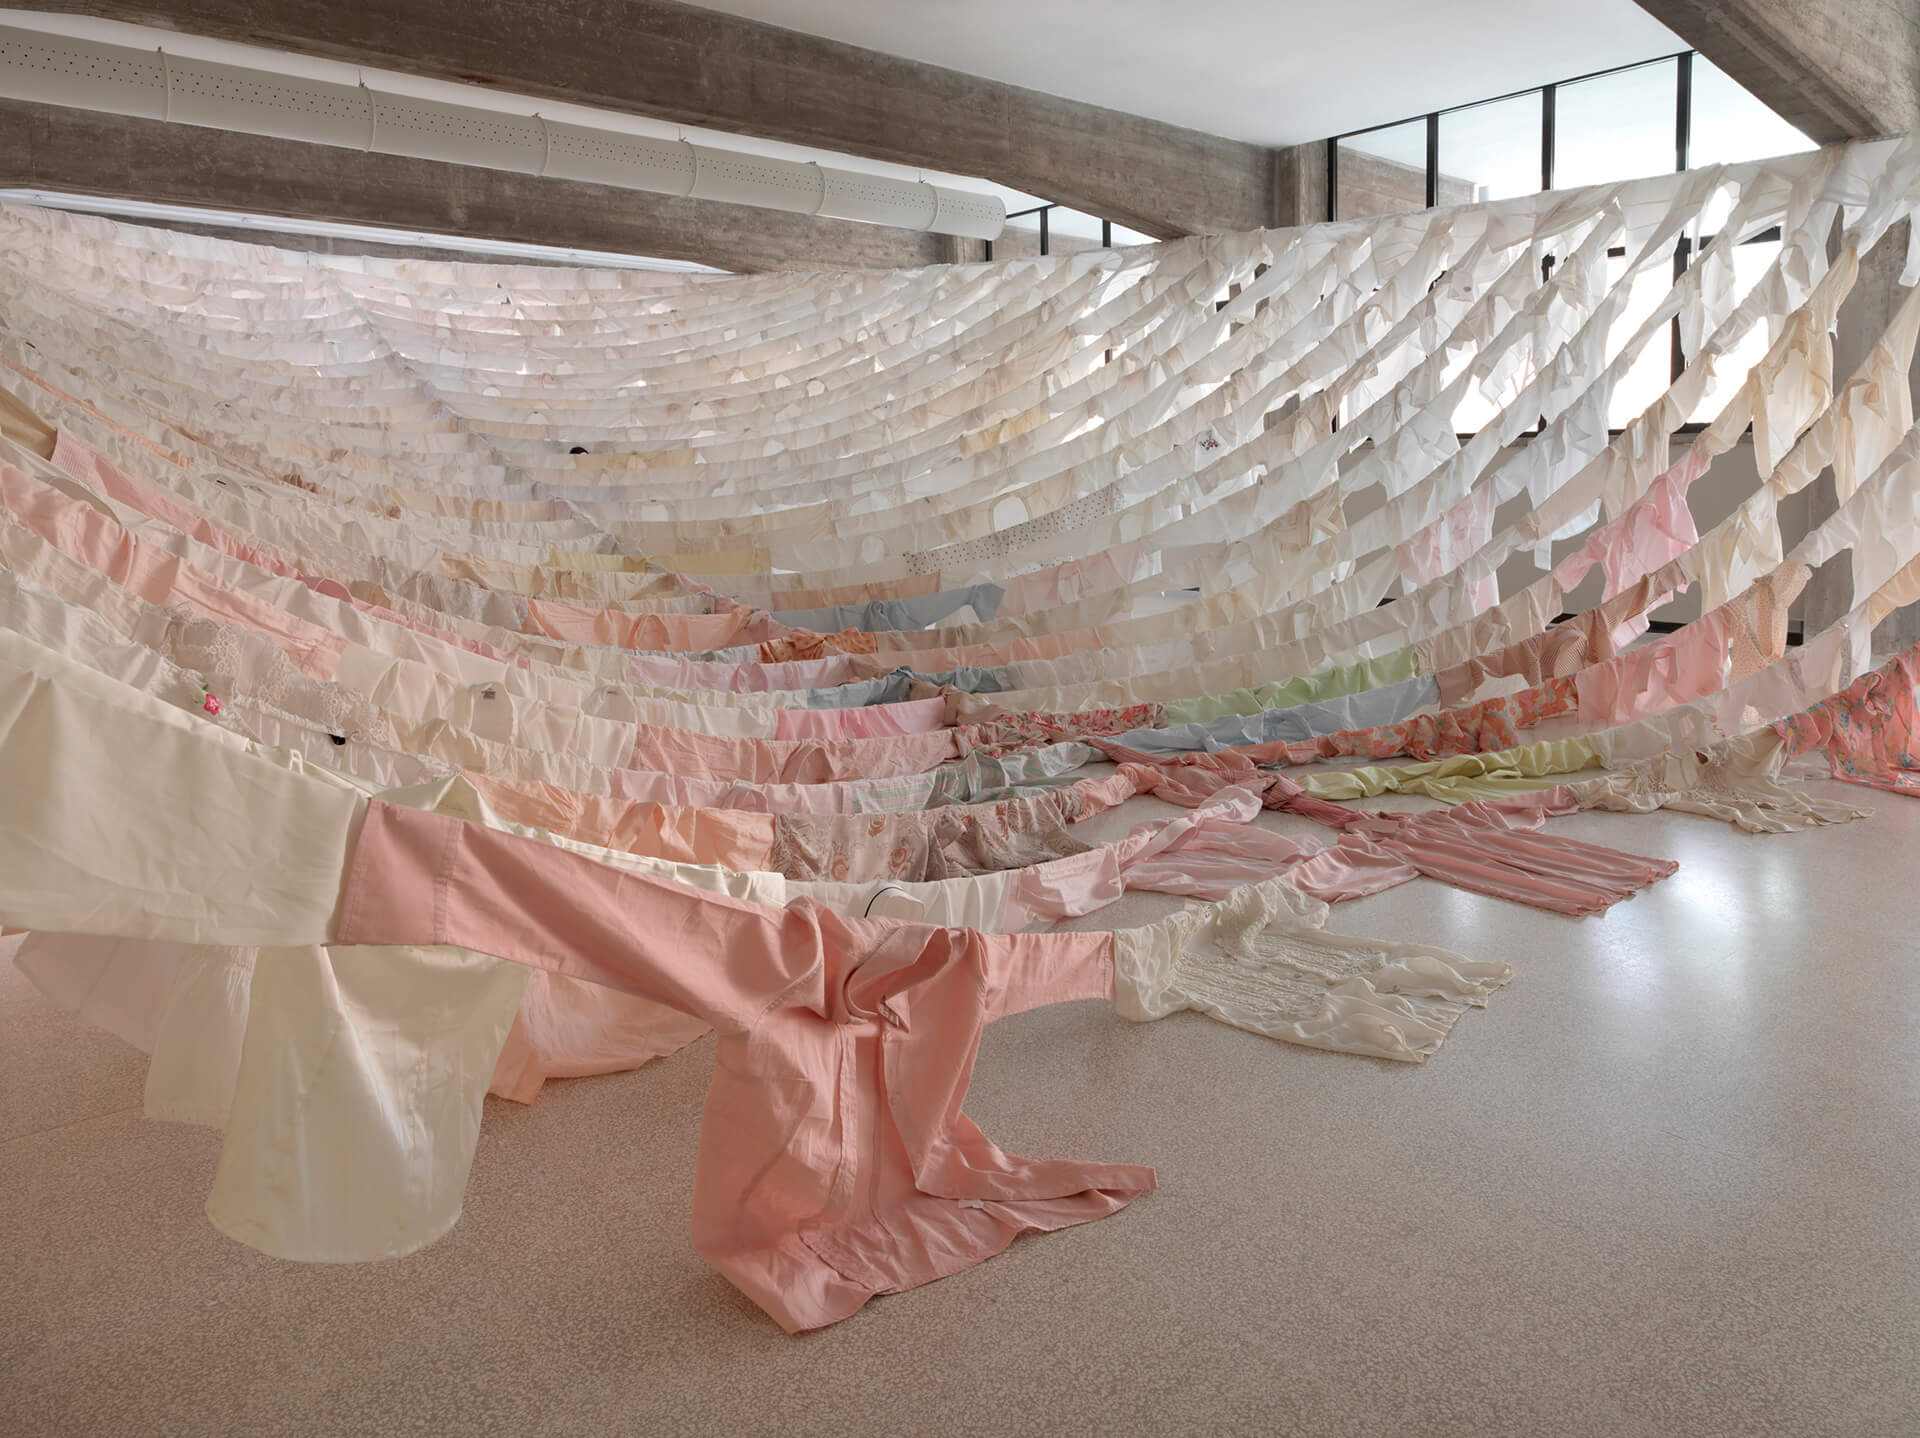 Textile-based installations by Kaarina Kaikkonen reimagine the urban architecture